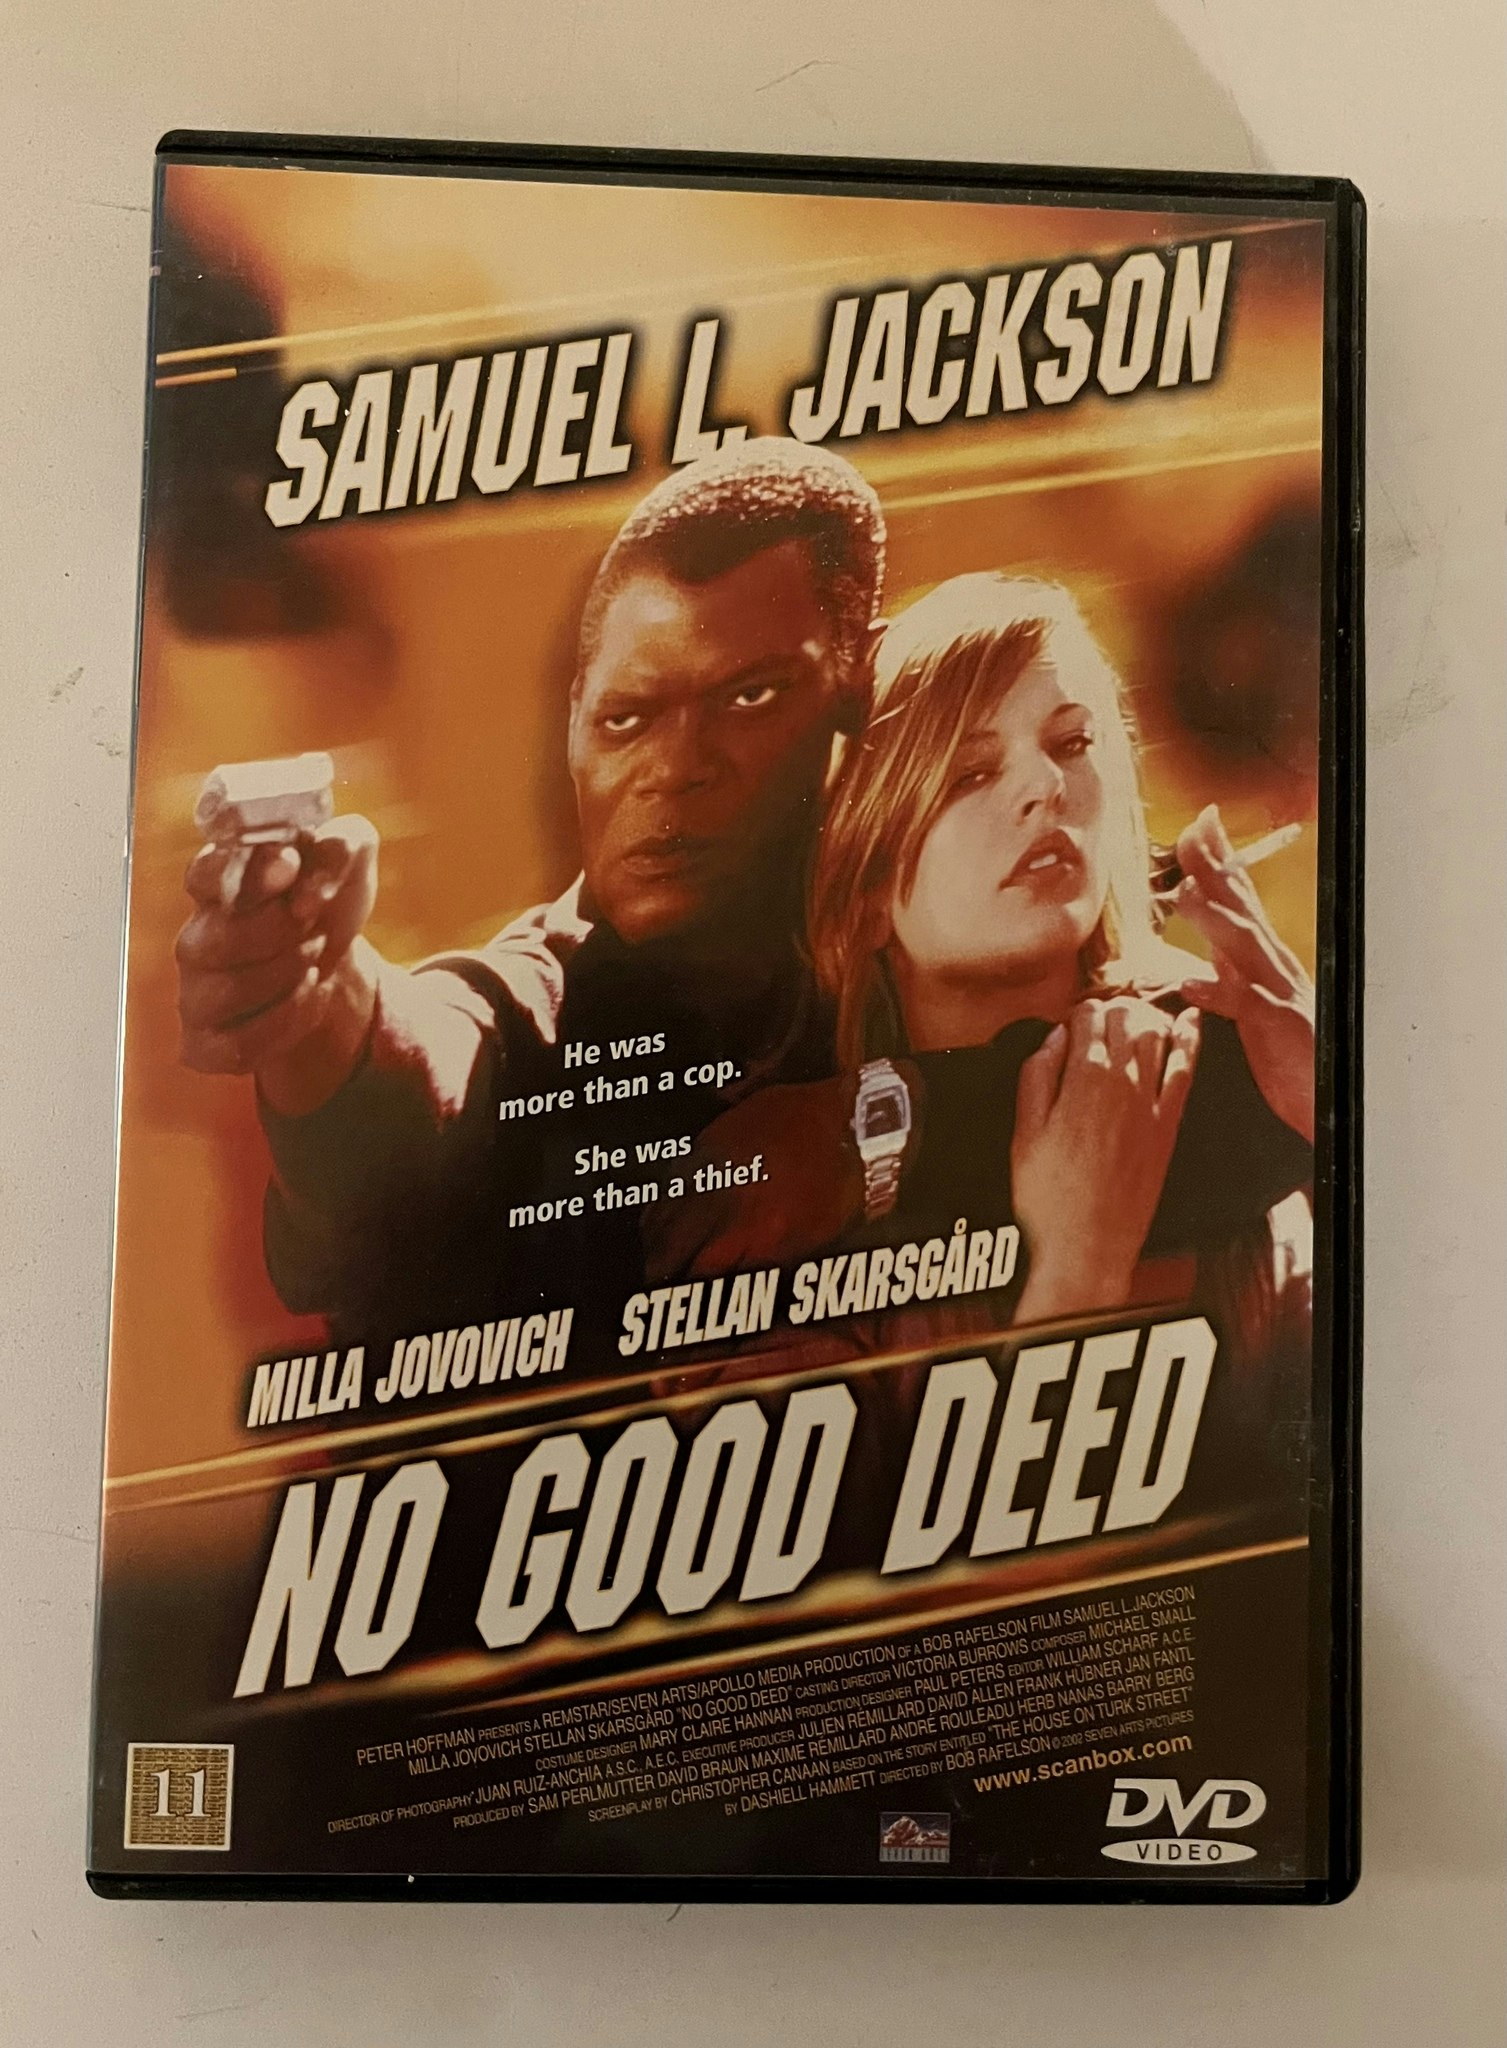 DVD - No Good Deed